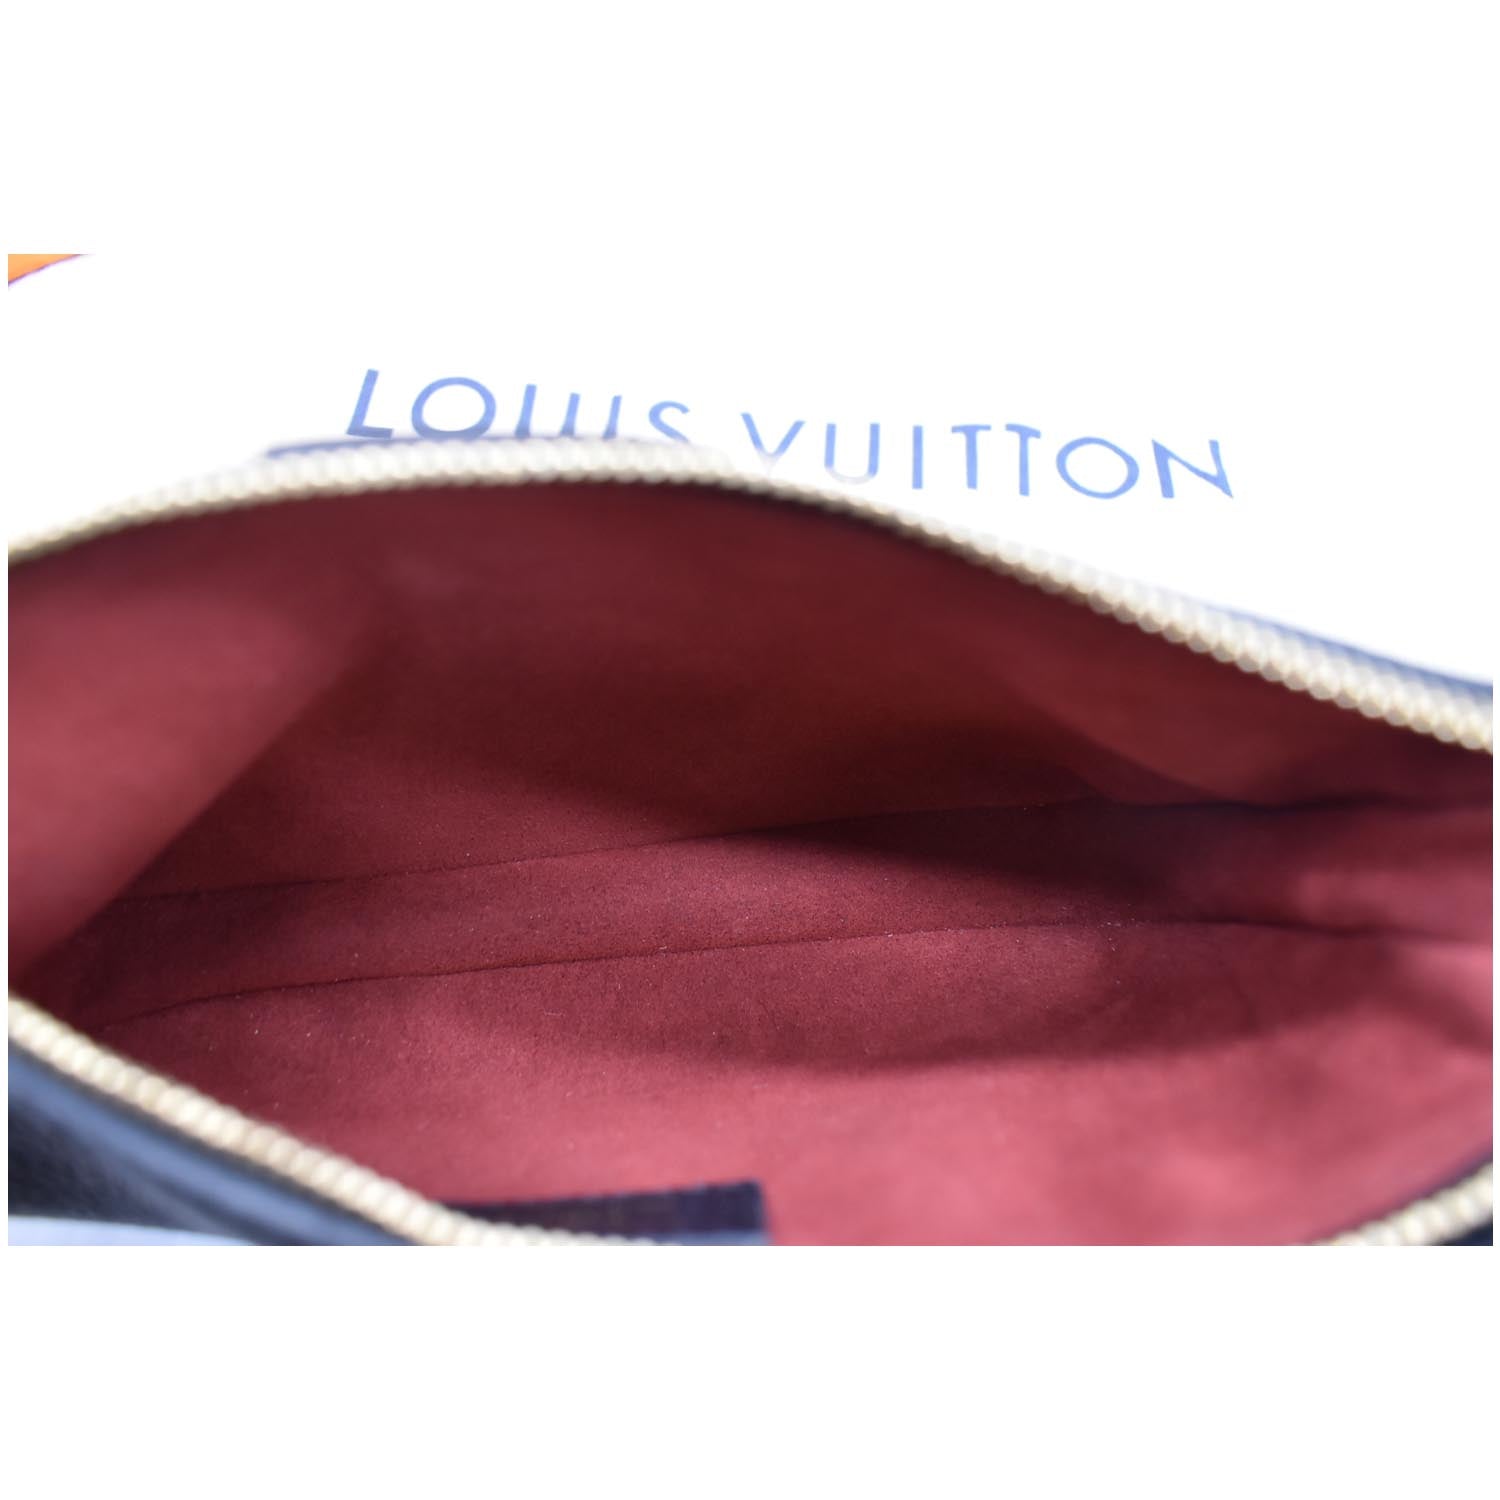 Multi Pochette Accessoires Bicolor Monogram Empreinte Leather - Handbags